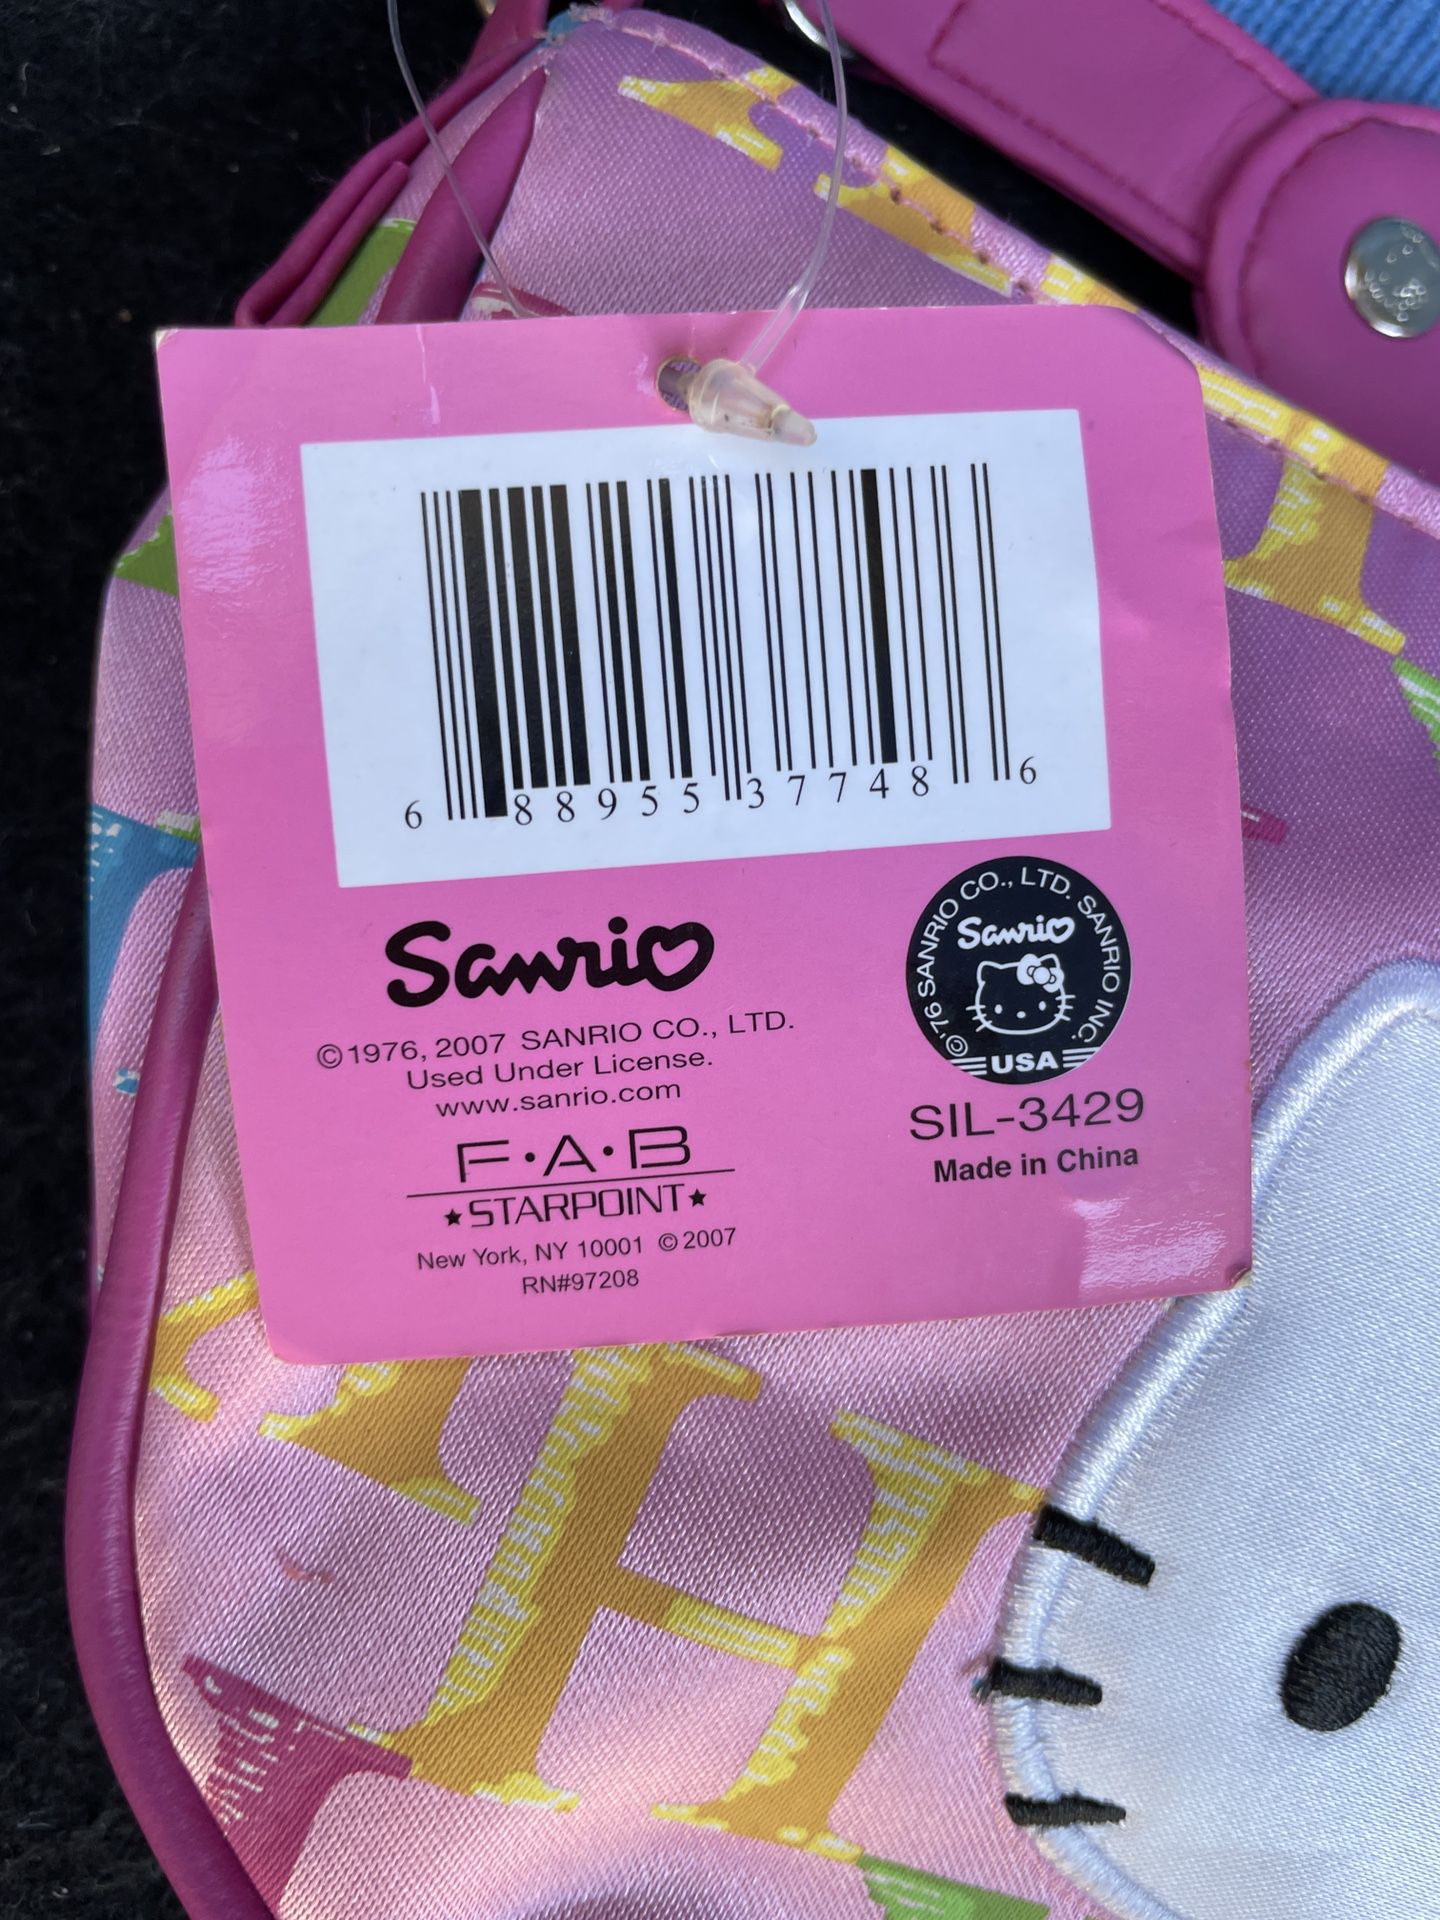 NWT Vintage Sanrio Hello Kitty Hobo Purse